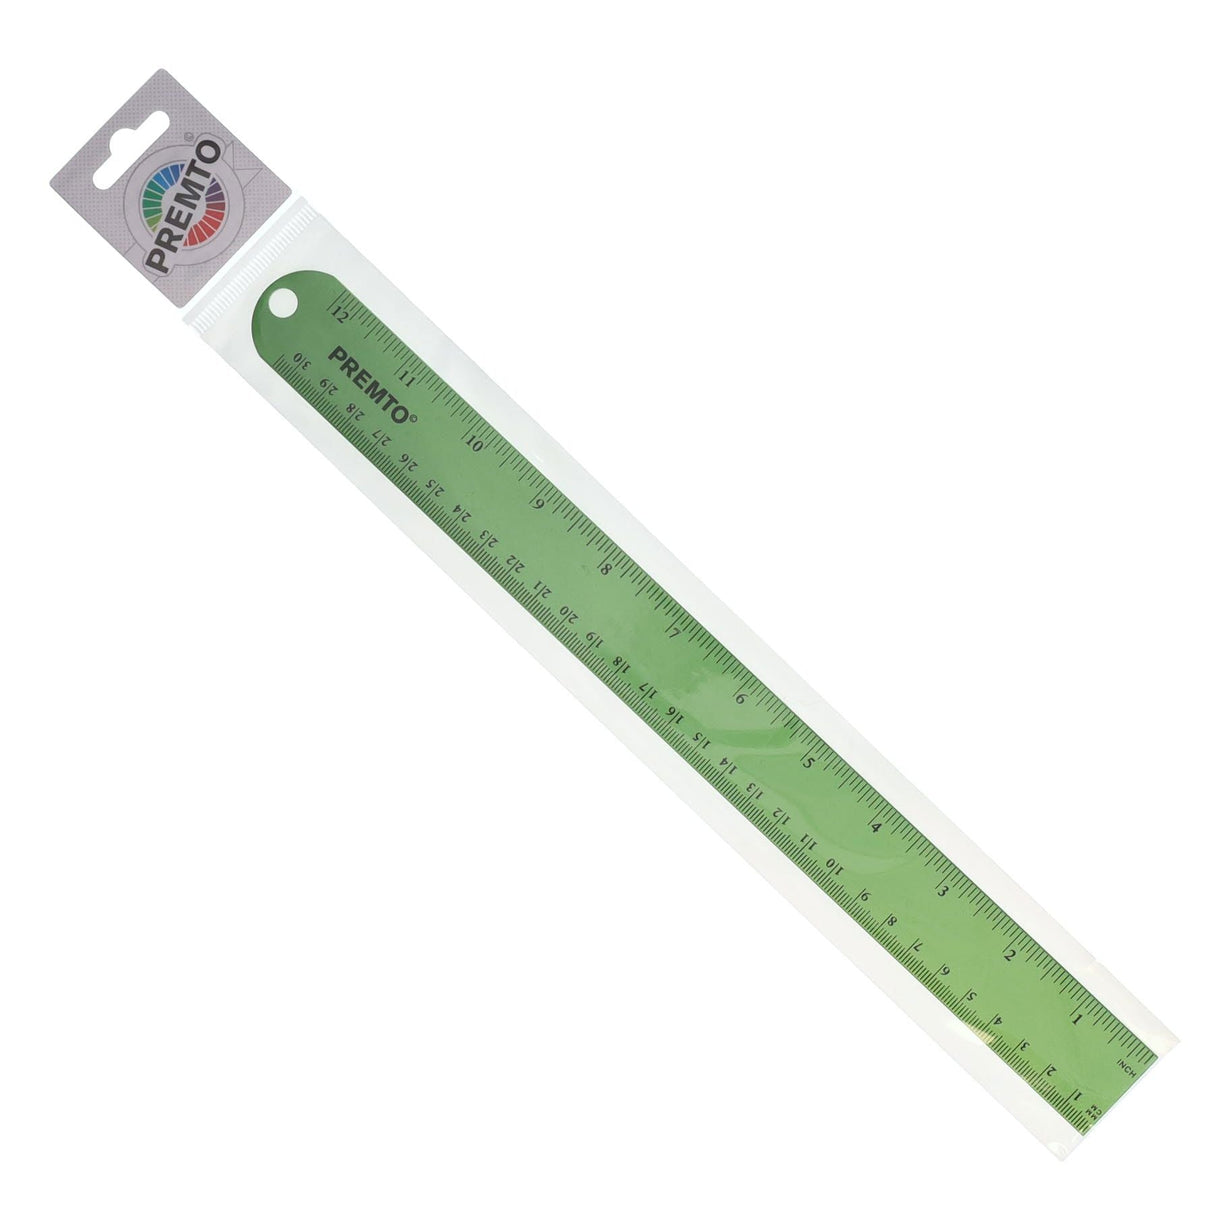 Premto S1 Aluminium Ruler 30cm - Caterpillar Green | Stationery Shop UK